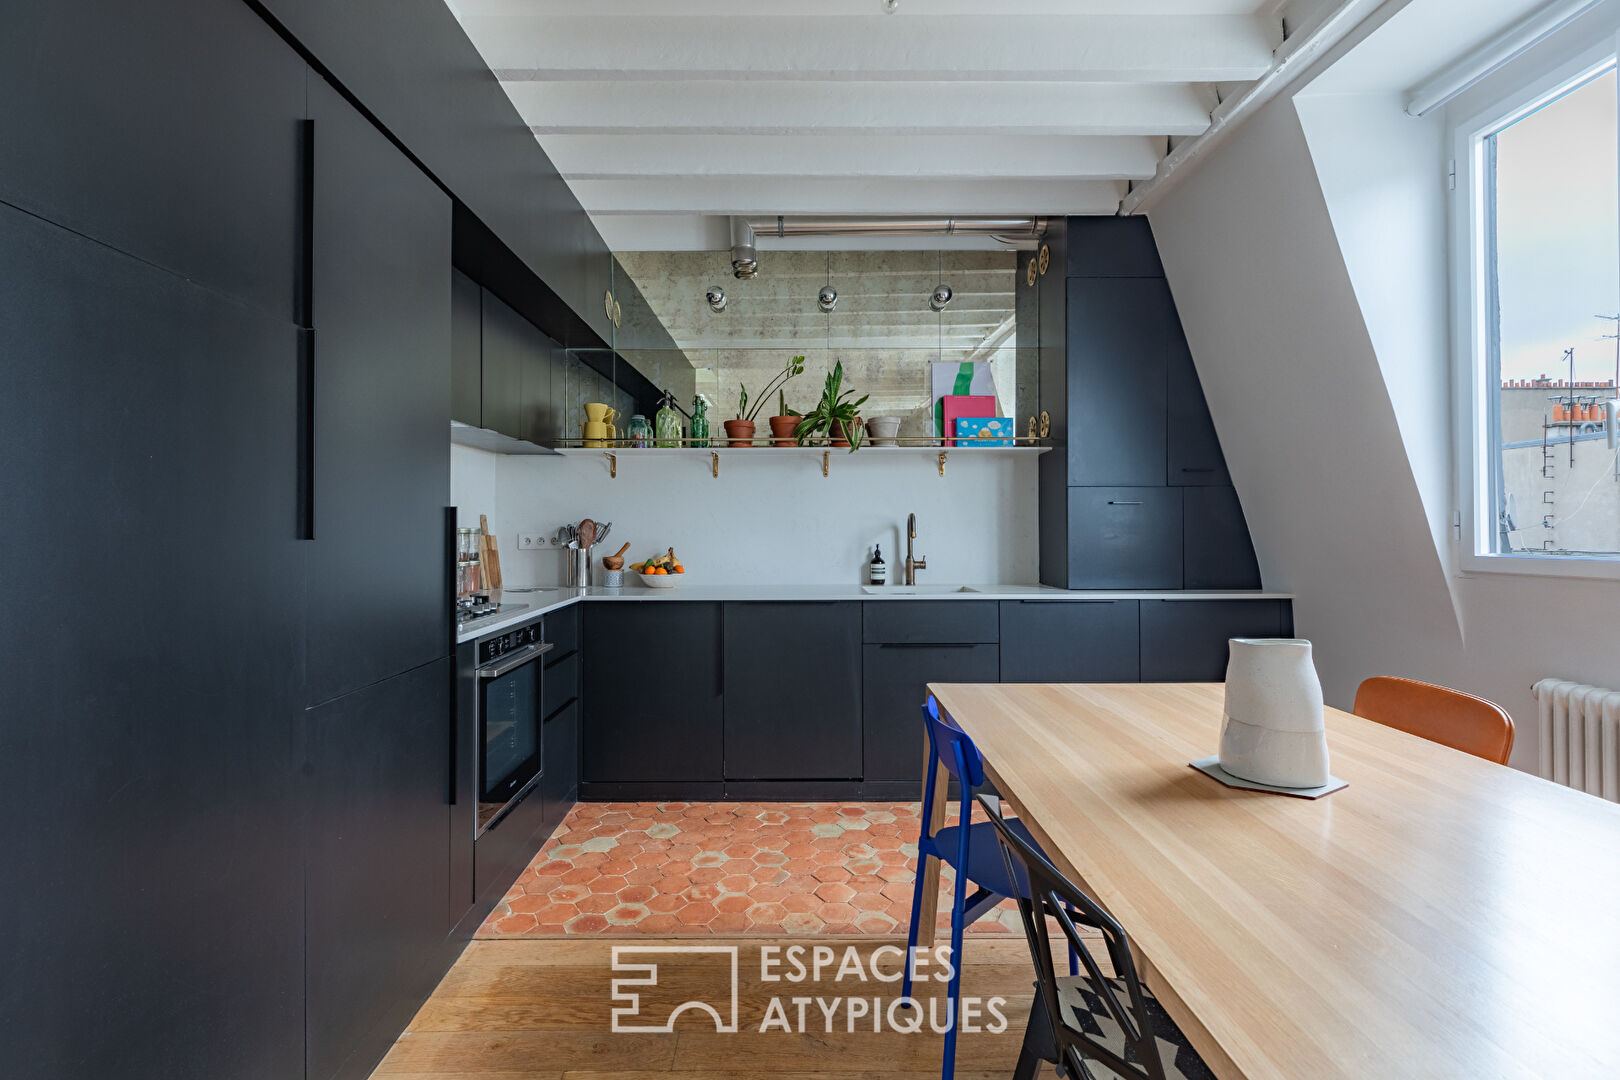 Top floor and adjoining studio renovated in Epinettes-Batignolles